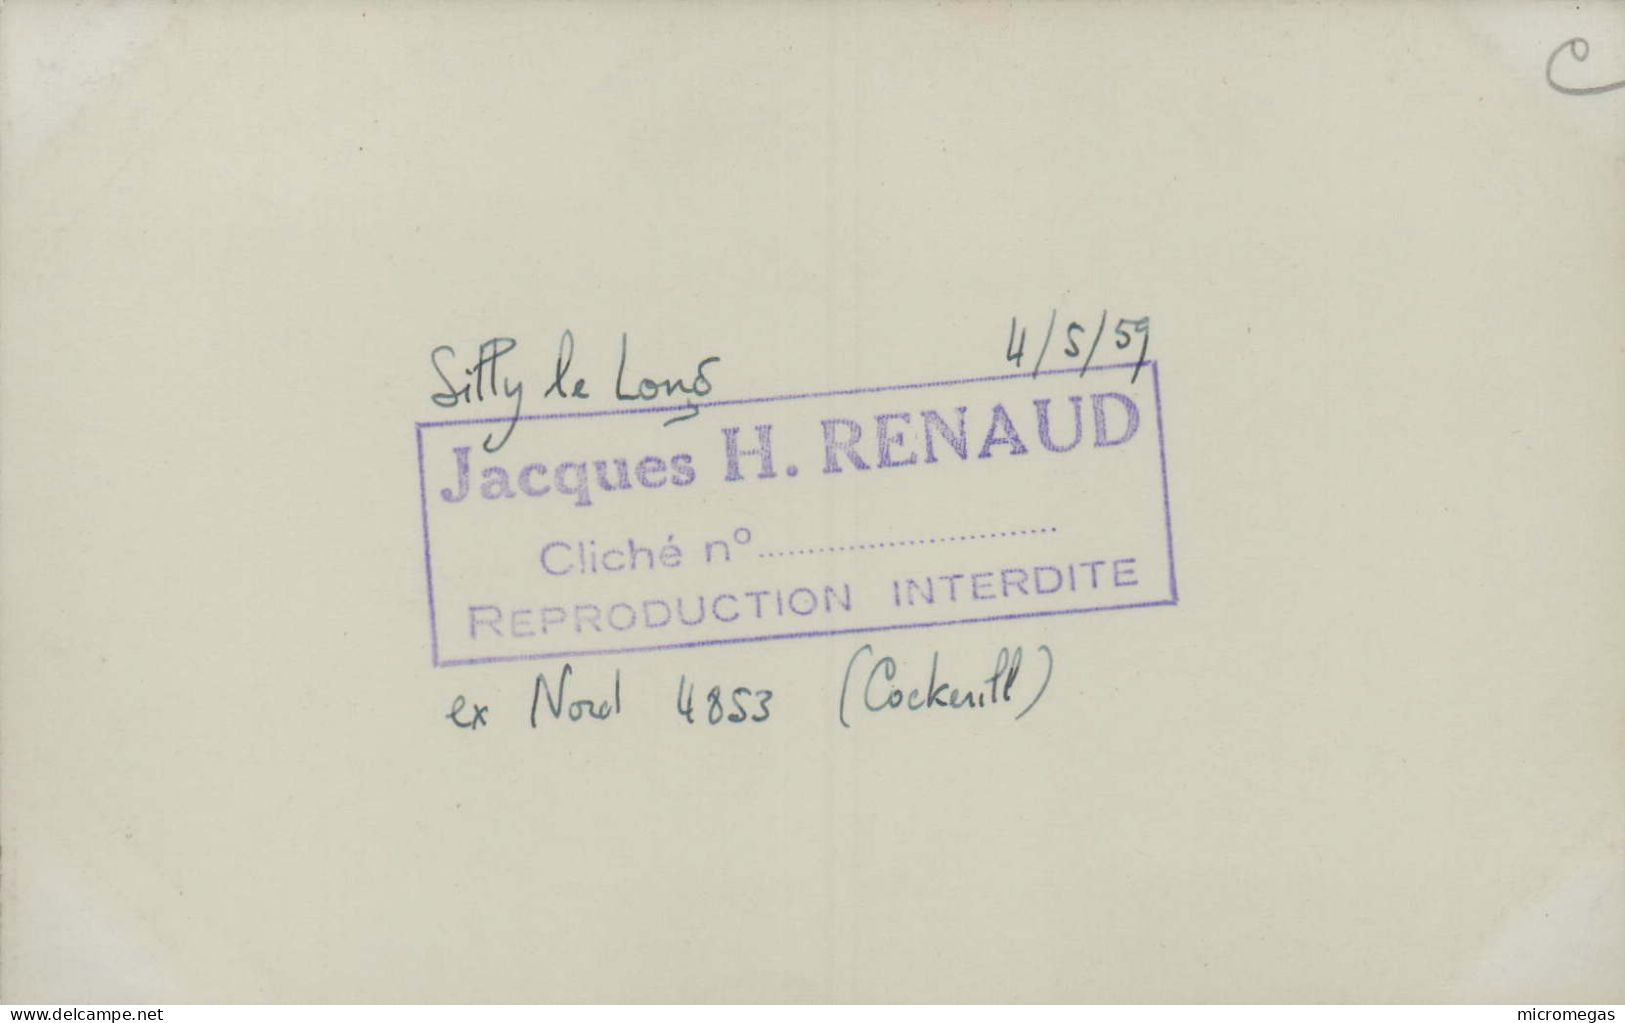 Silly-le-Long - Ex. Nord 4853 (Cockerill) - Cliché Jacques H. Renaud, 4-5-1959 - Treni